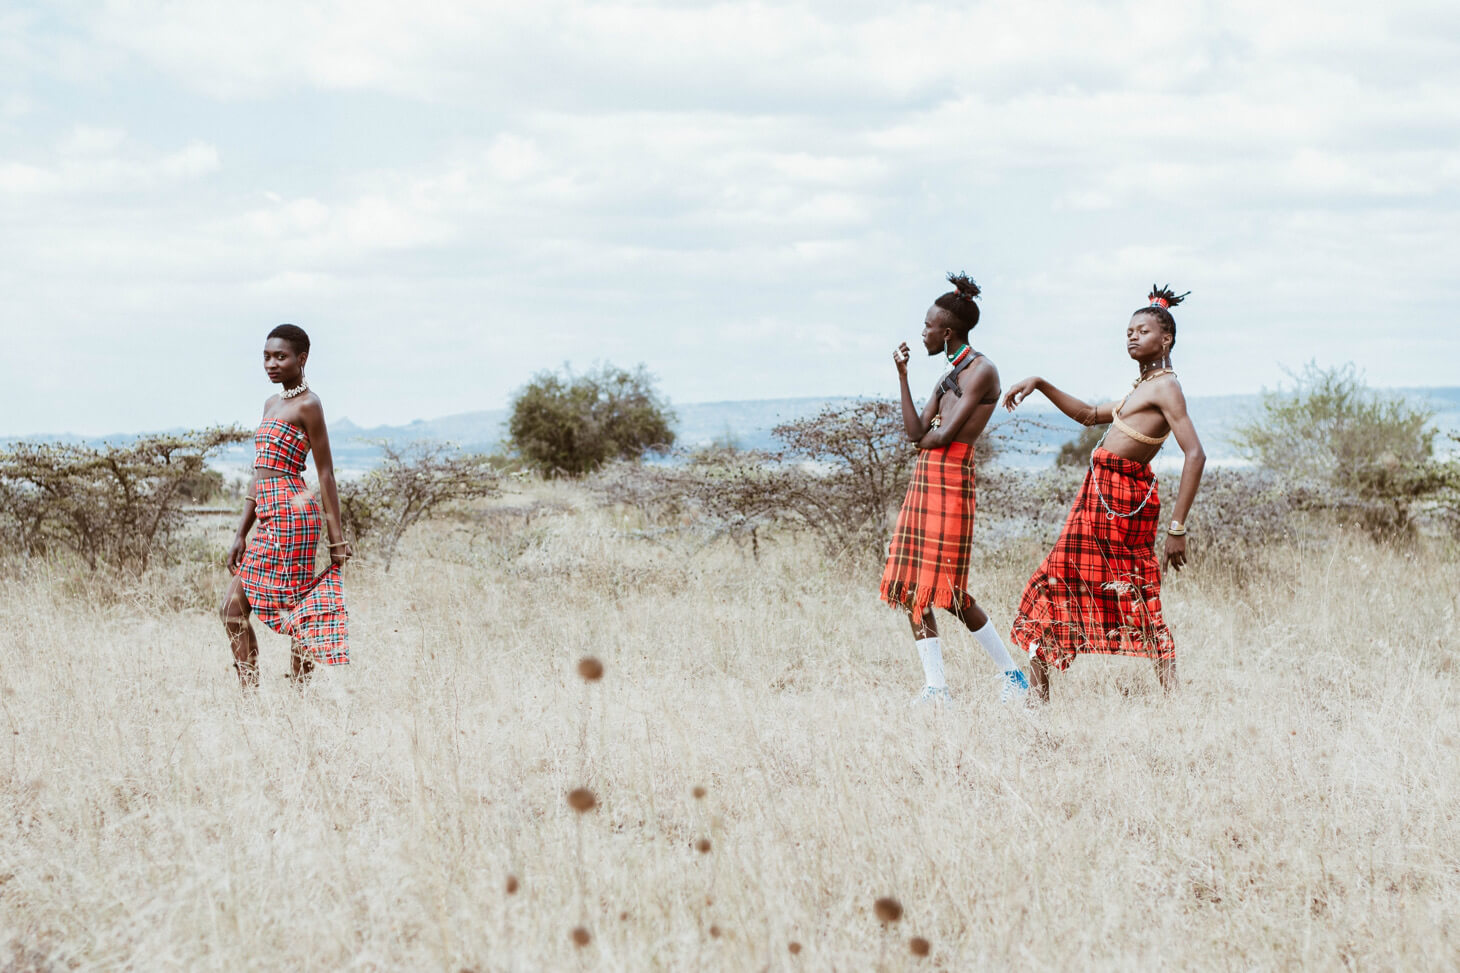 The Maa speaking Maasai of Kenya